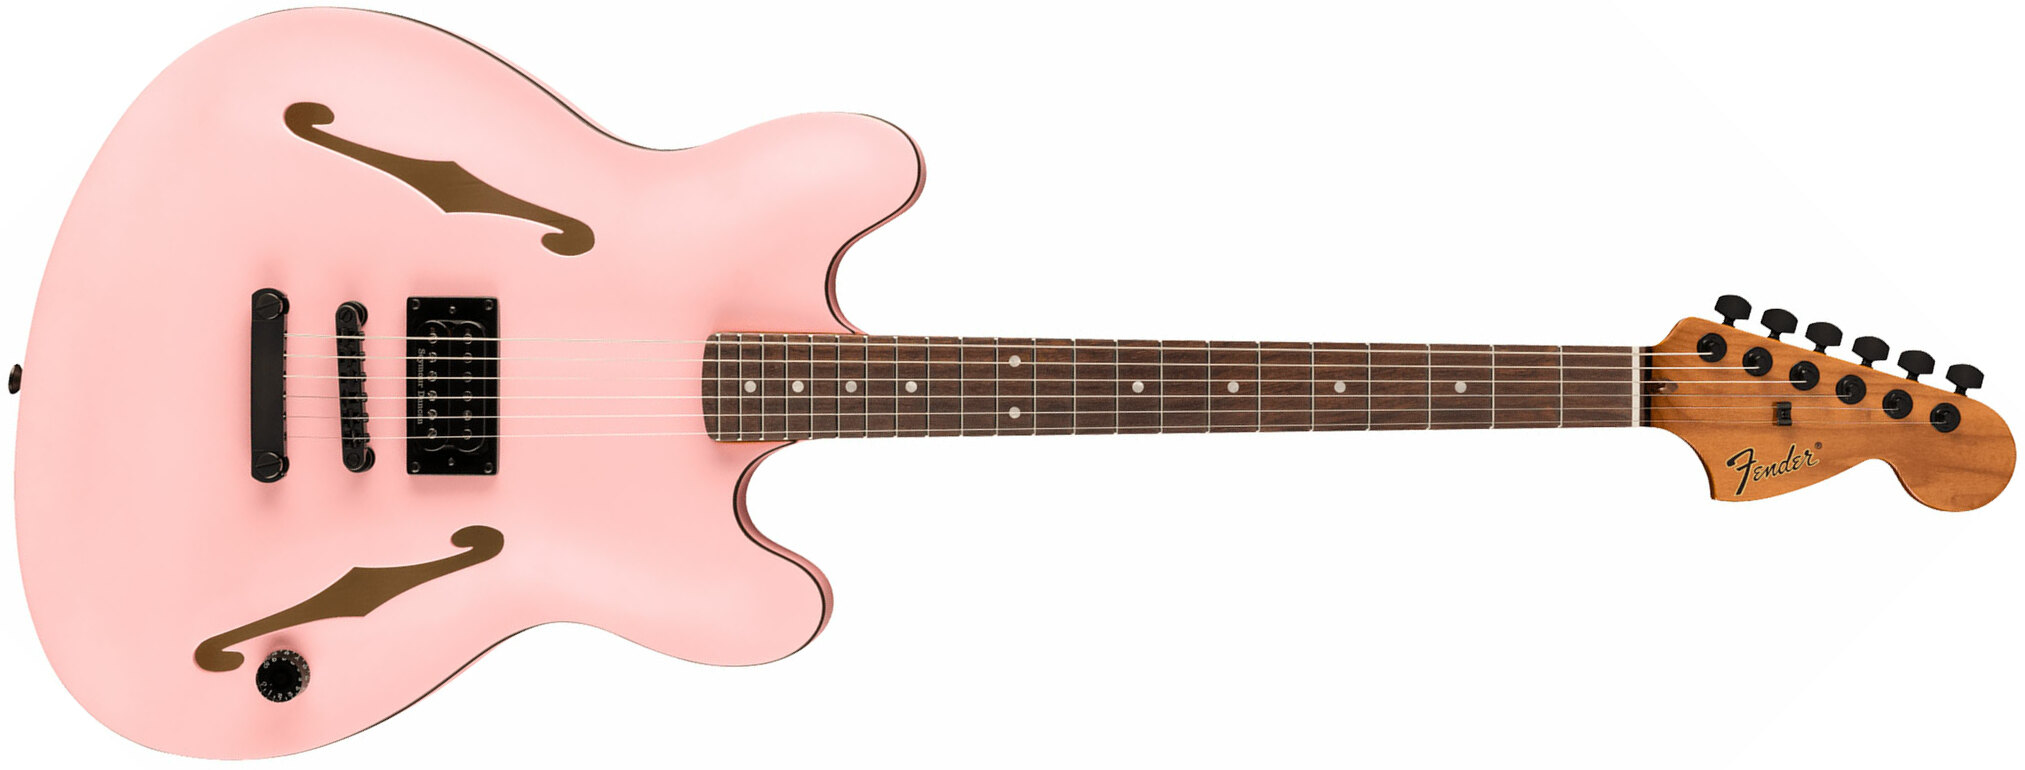 Fender Tom Delonge Starcaster Signature 1h Seymour Duncan Ht Rw - Satin Shell Pink - Semi-hollow electric guitar - Main picture